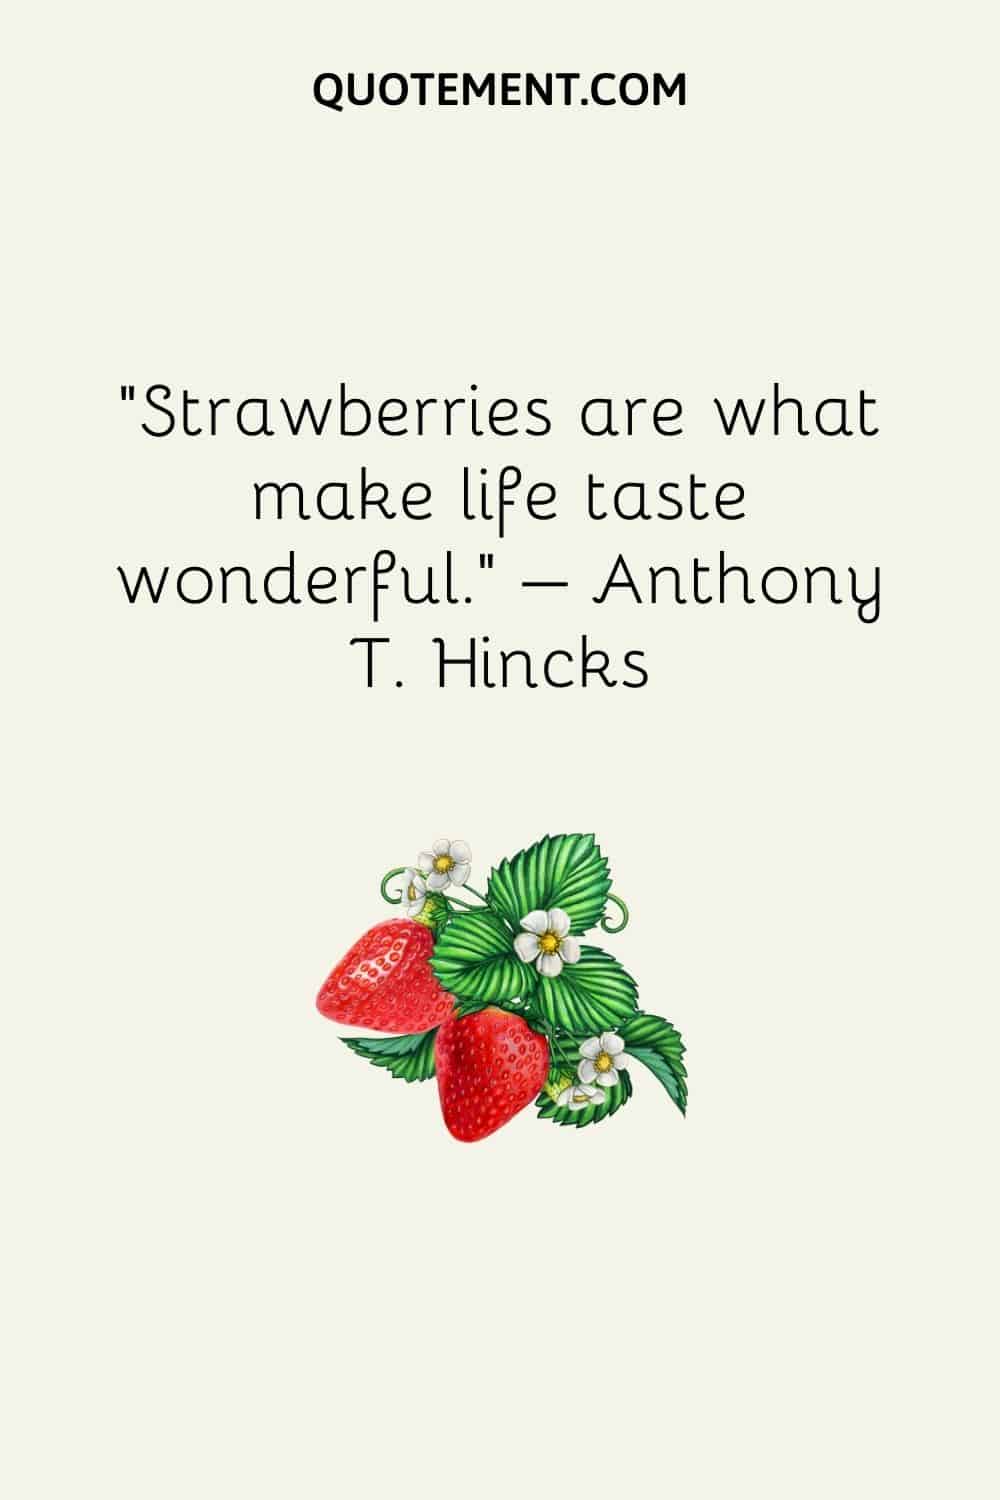 Strawberries are what make life taste wonderful.